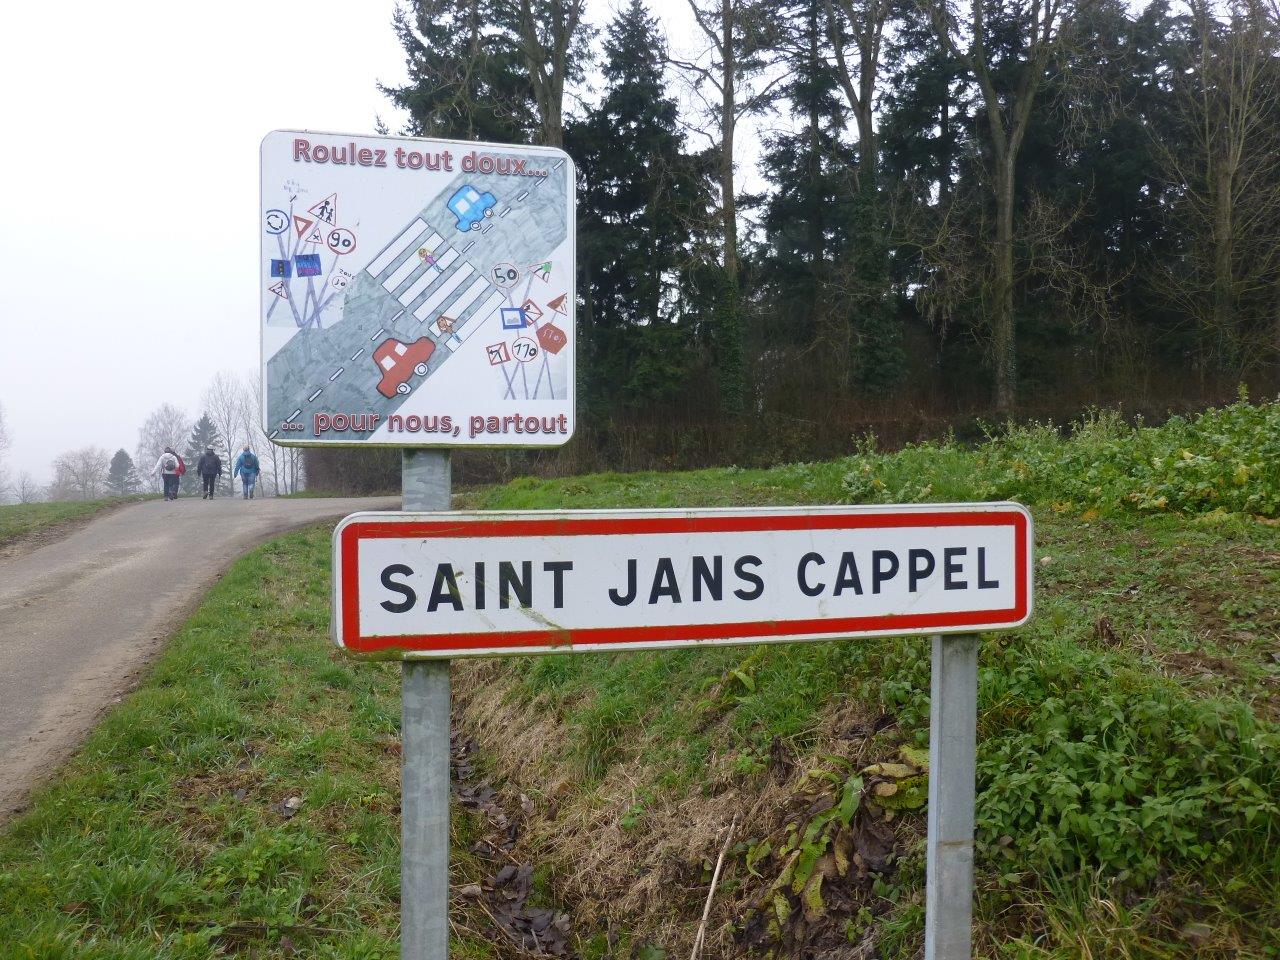 Saint Jans Cappel (1)